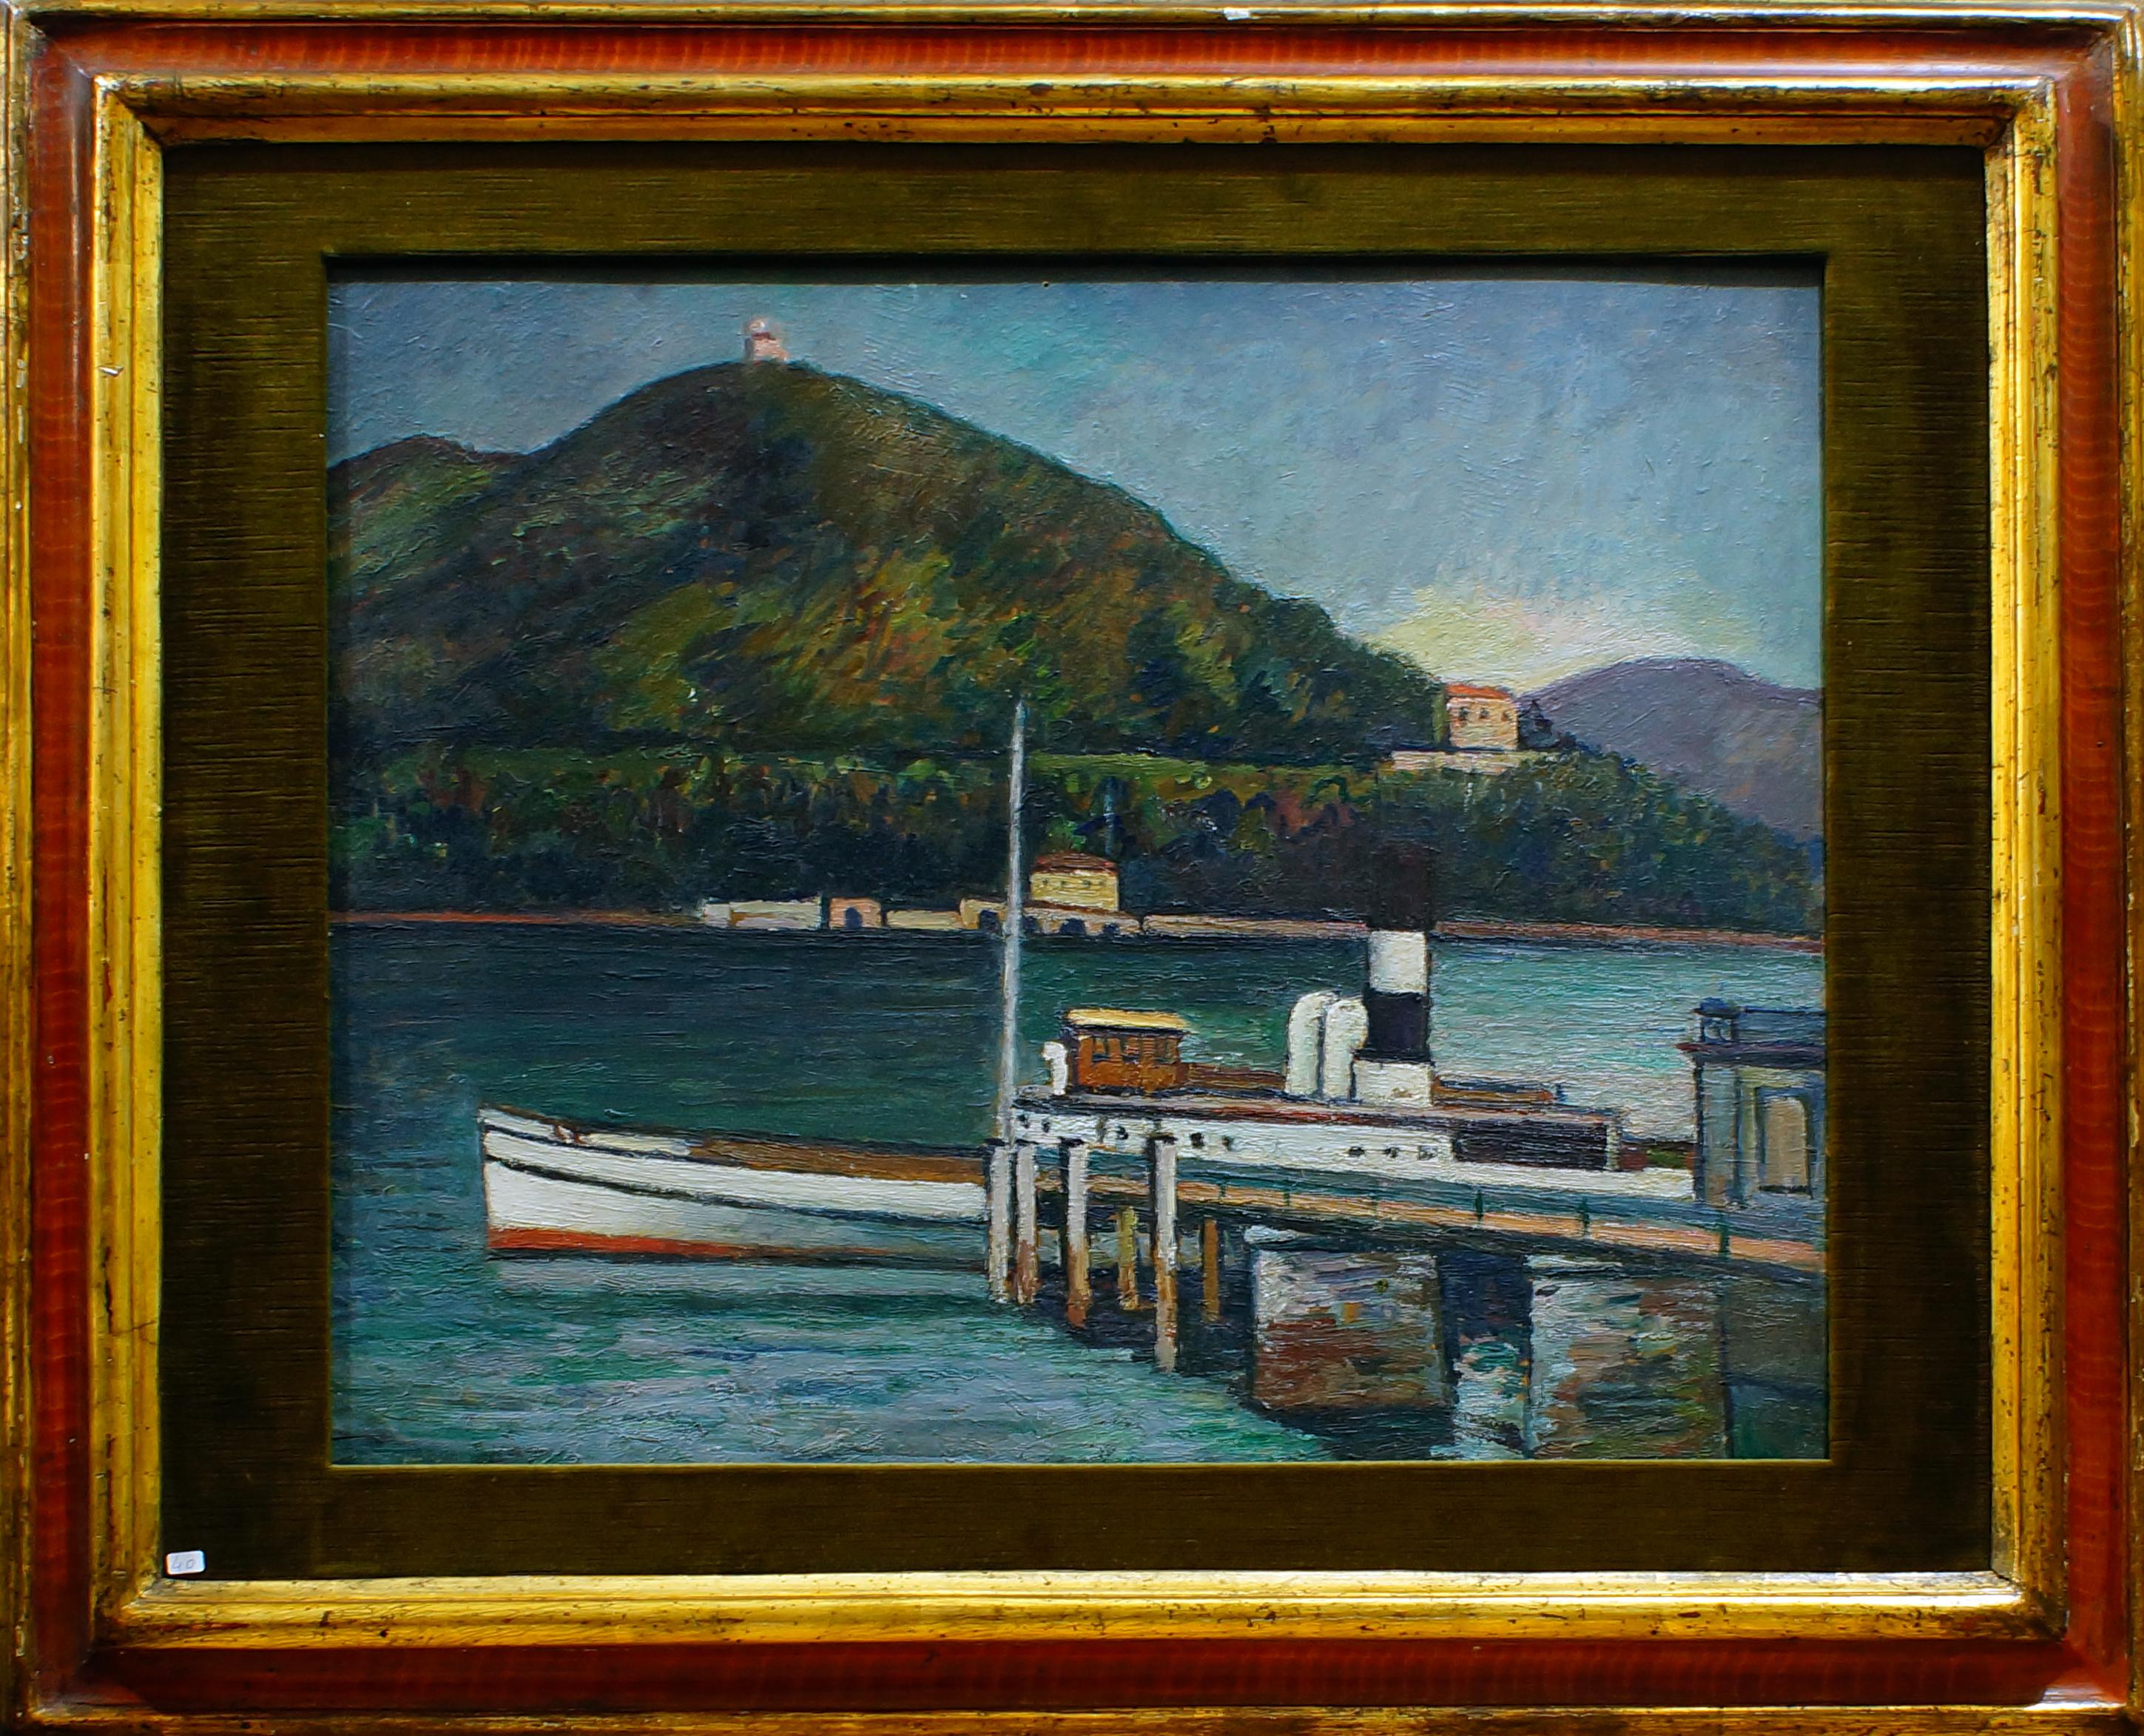 Jetty on the Lake Iseo - Huile sur panneau par P. Marussig - 1928/30 - Painting de Piero Marussig